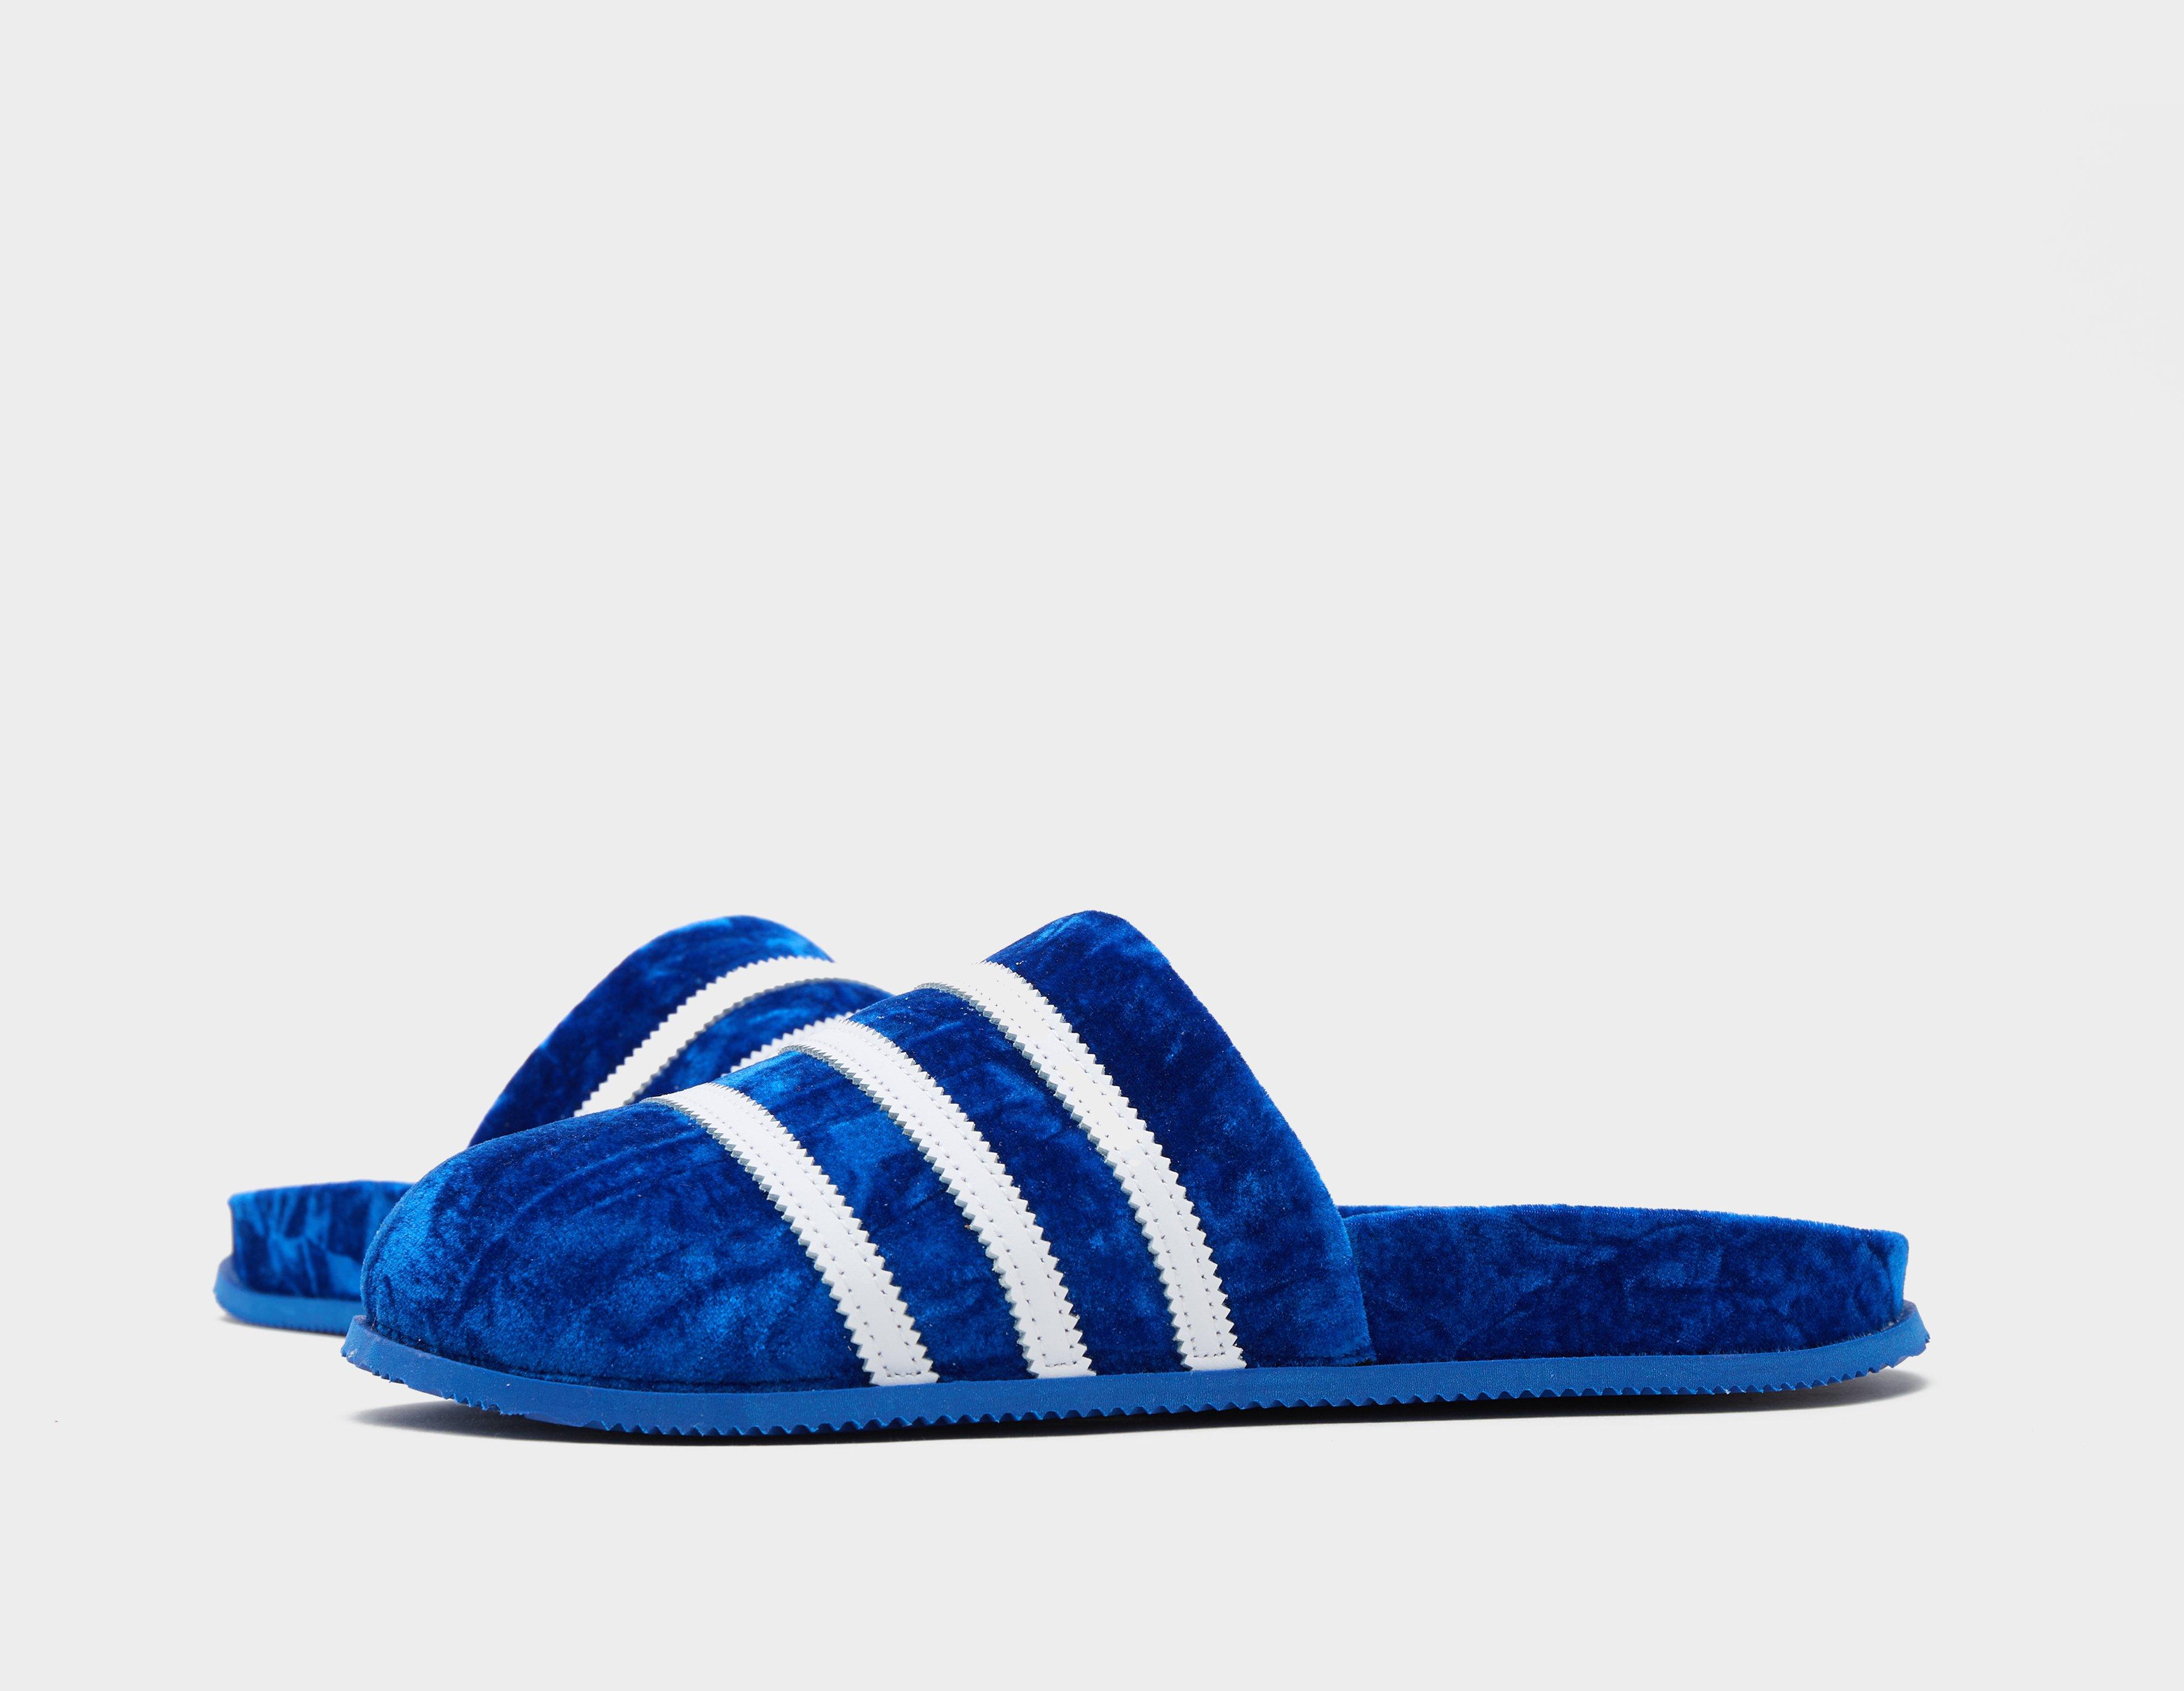 Vooruitgaan Joseph Banks gebied Blauw adidas Originals Adimule Slides- size? Nederland